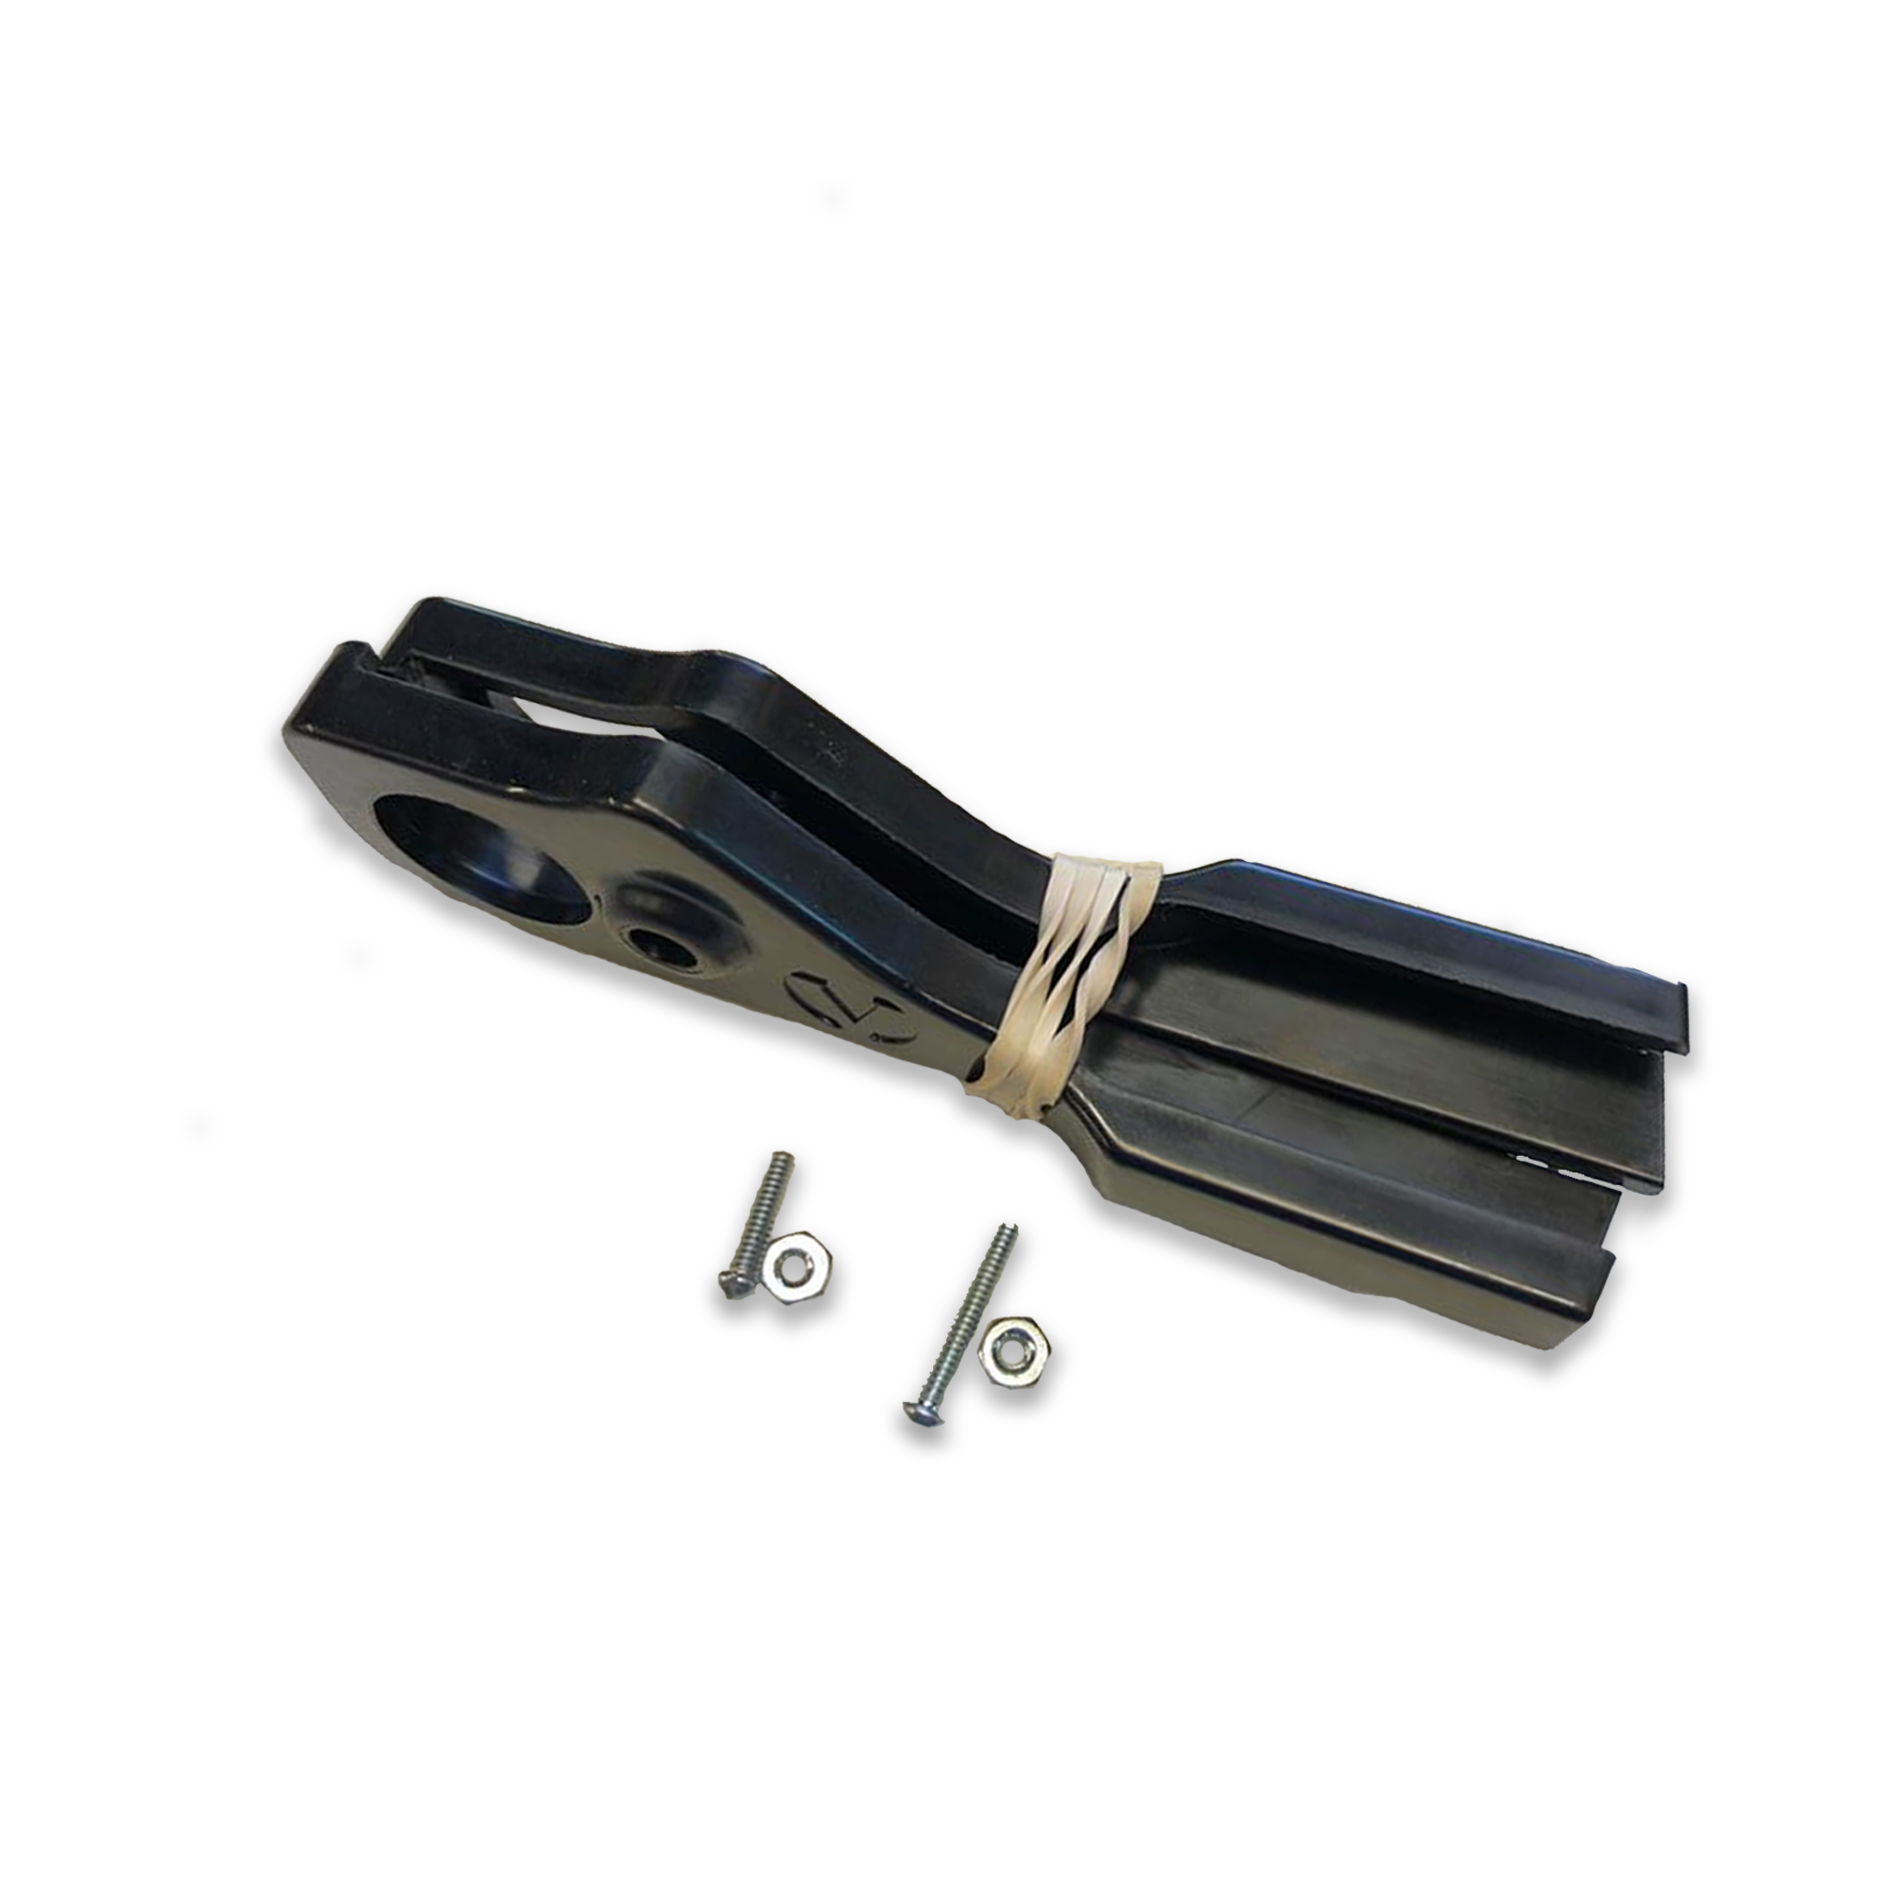 Electrode Welder Stinger Insulator Kit | Stinger V | American Made Arc Welding Tool